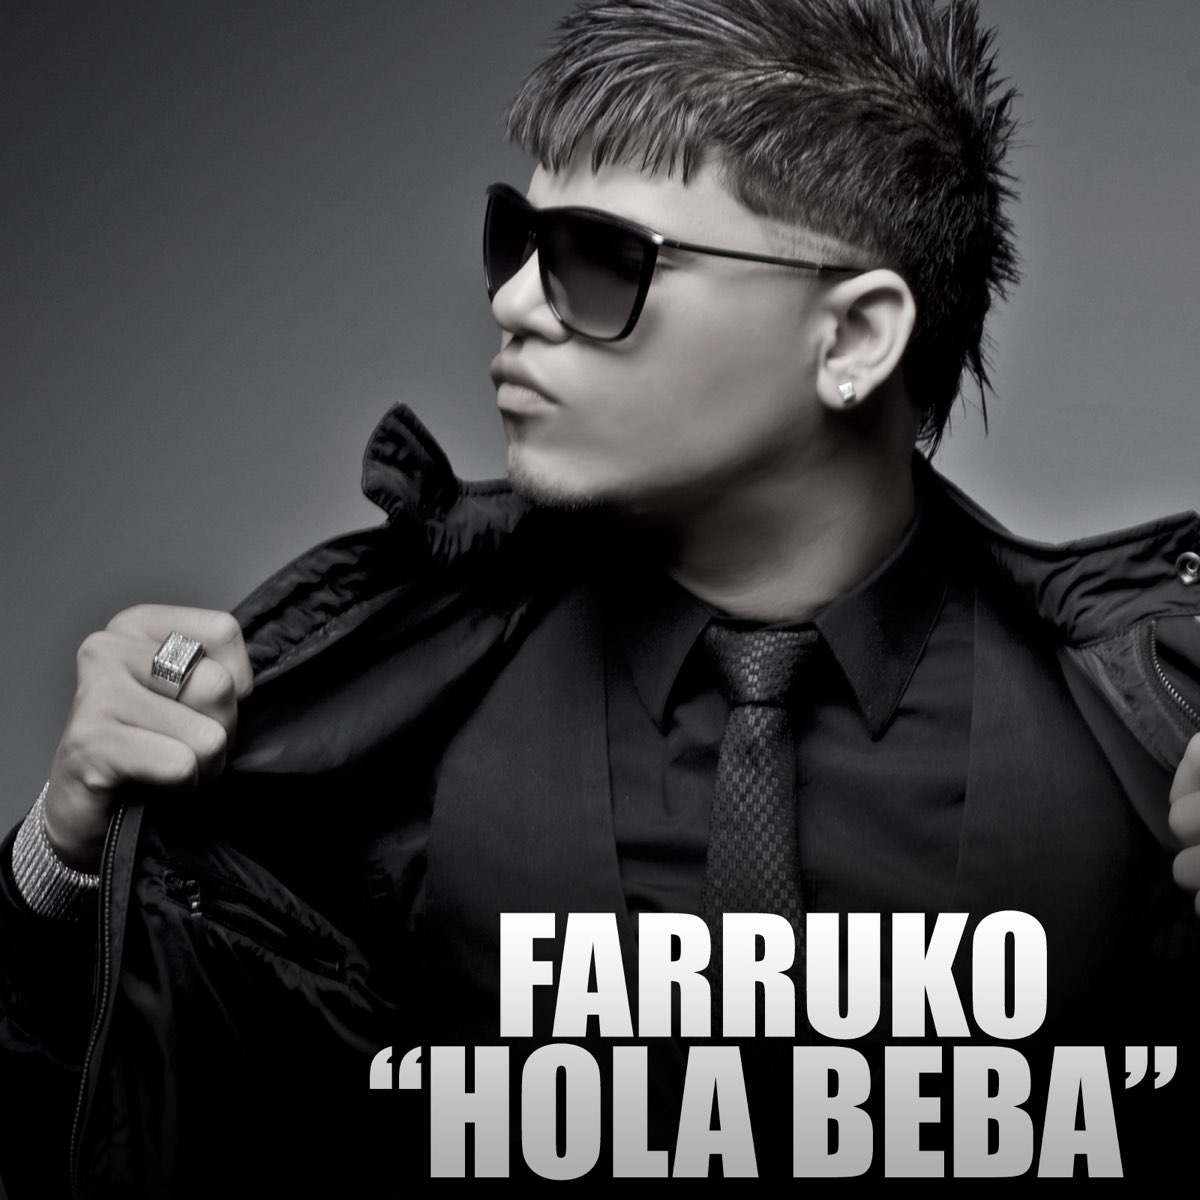 Hola Beba - Single” álbum de Farruko en Apple Music